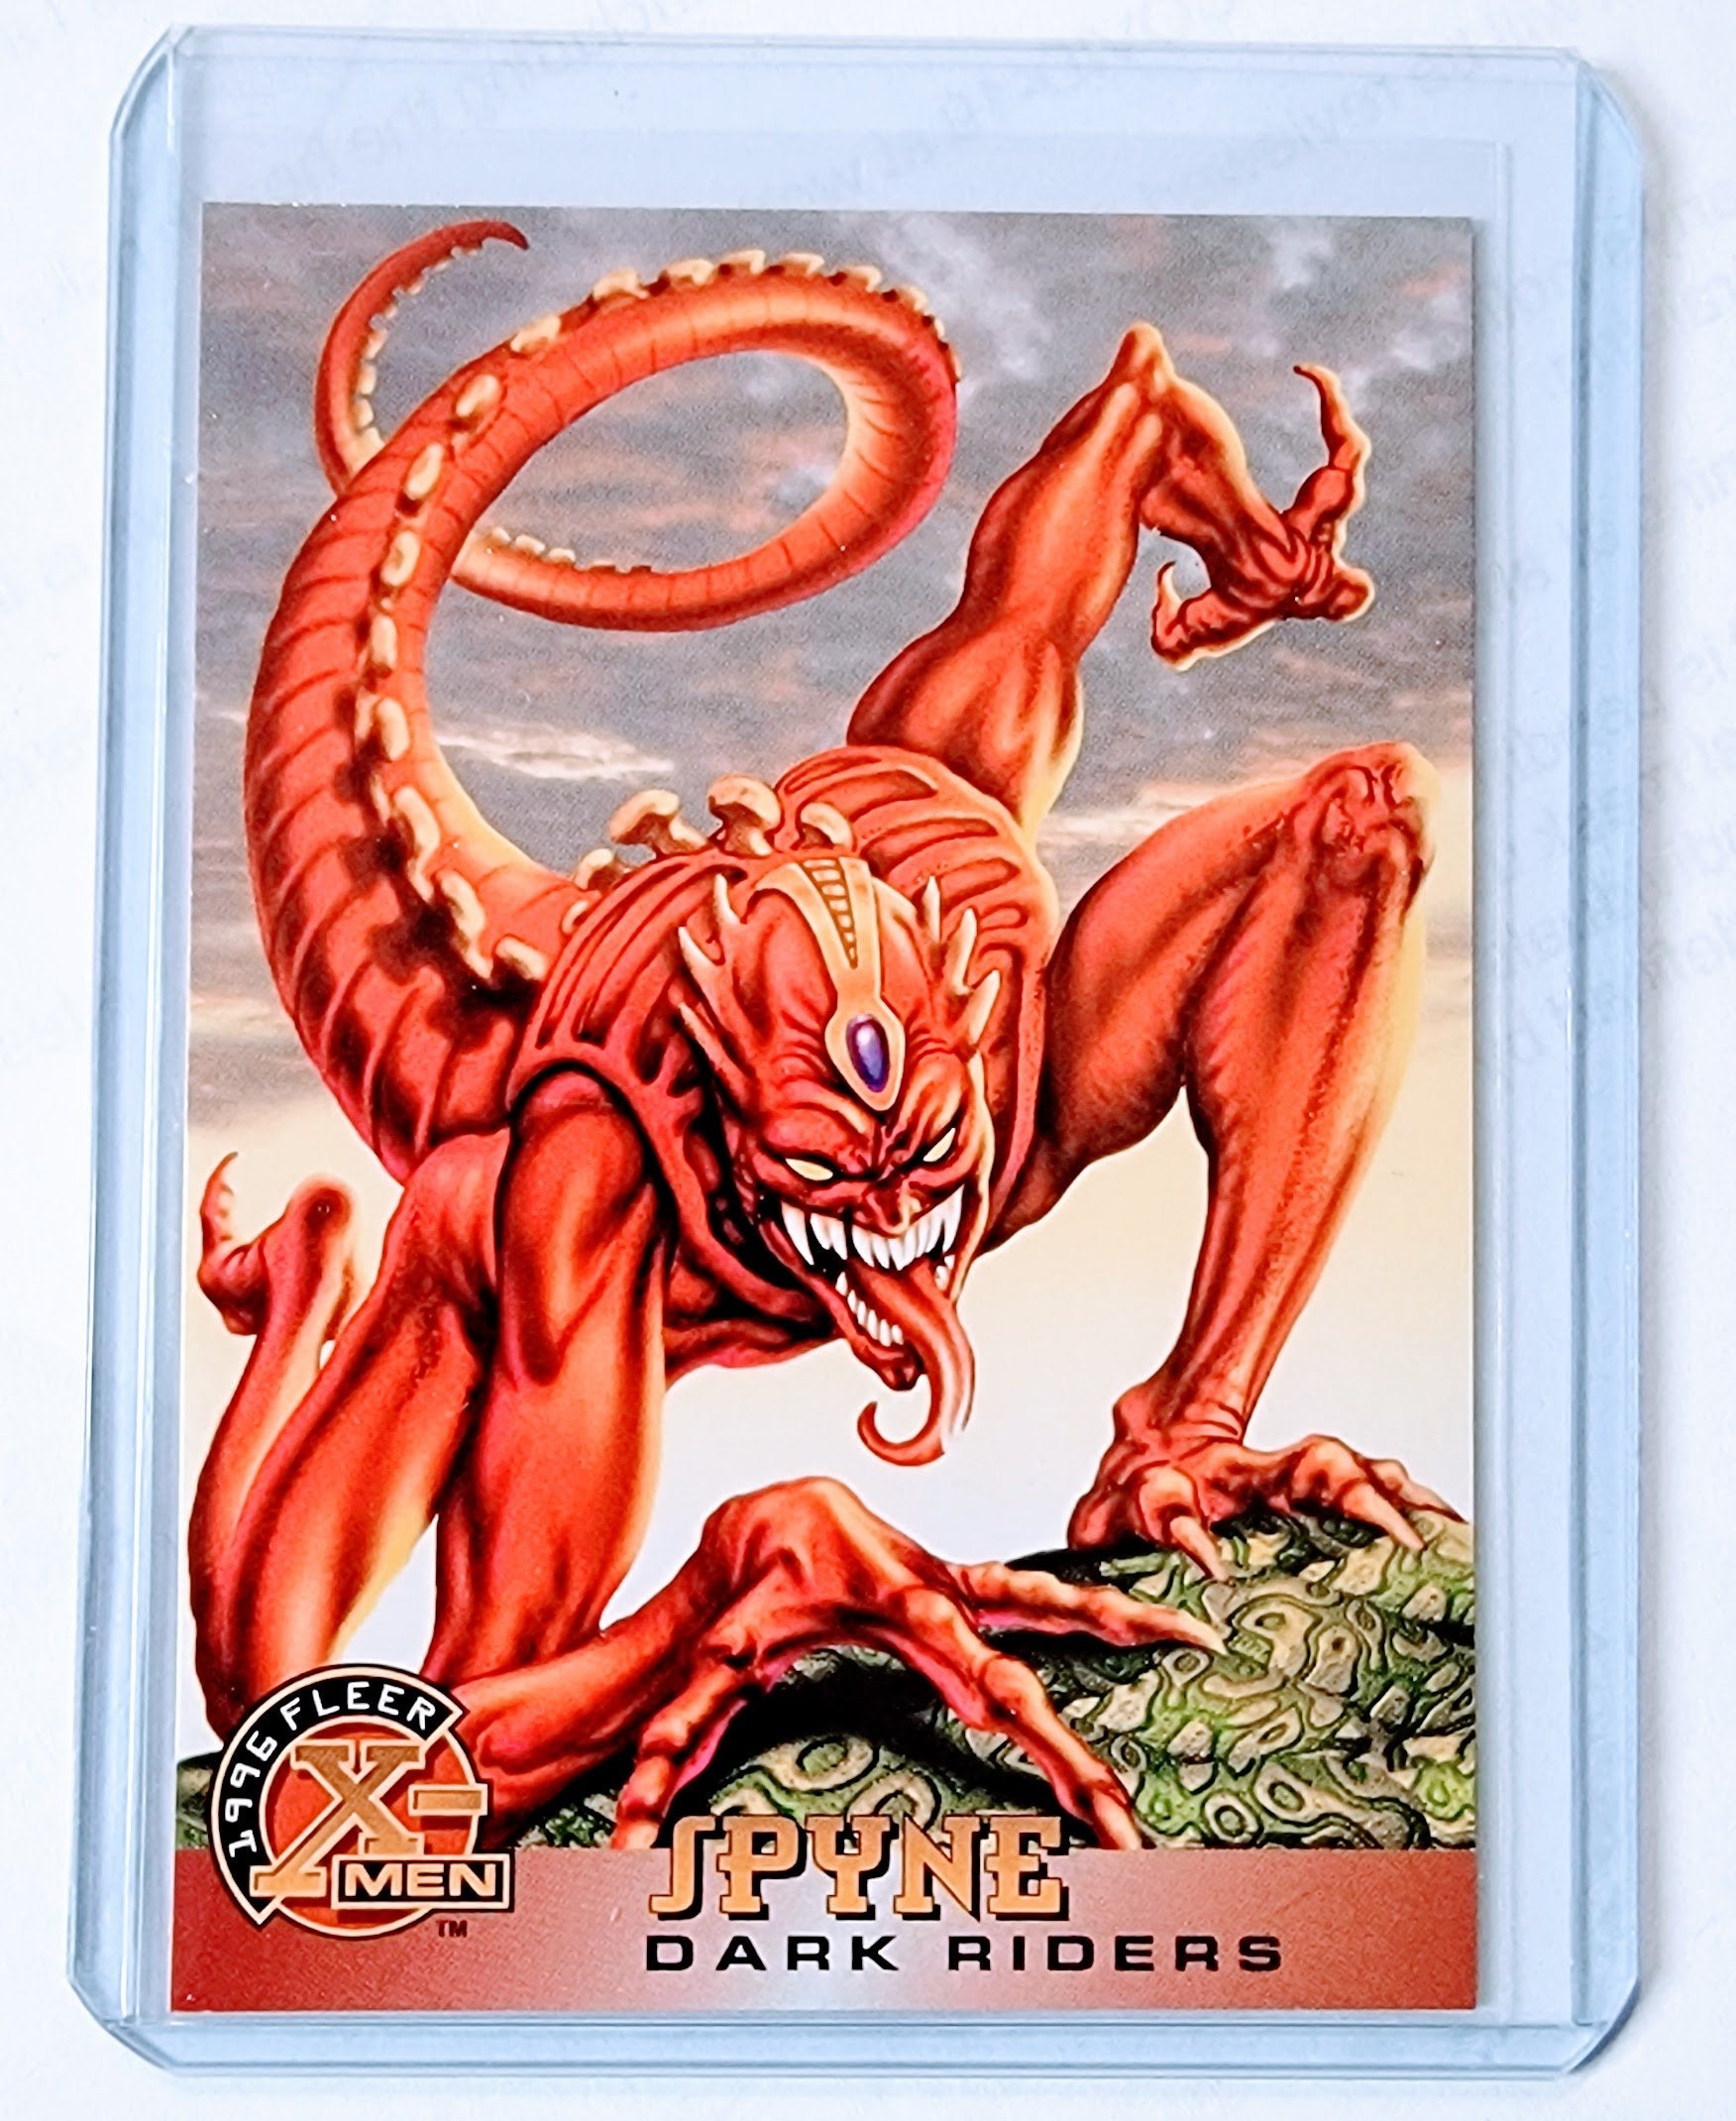 1996 Fleer X-Men Spyne Dark Riders Marvel Trading Card GRB1 simple Xclusive Collectibles   